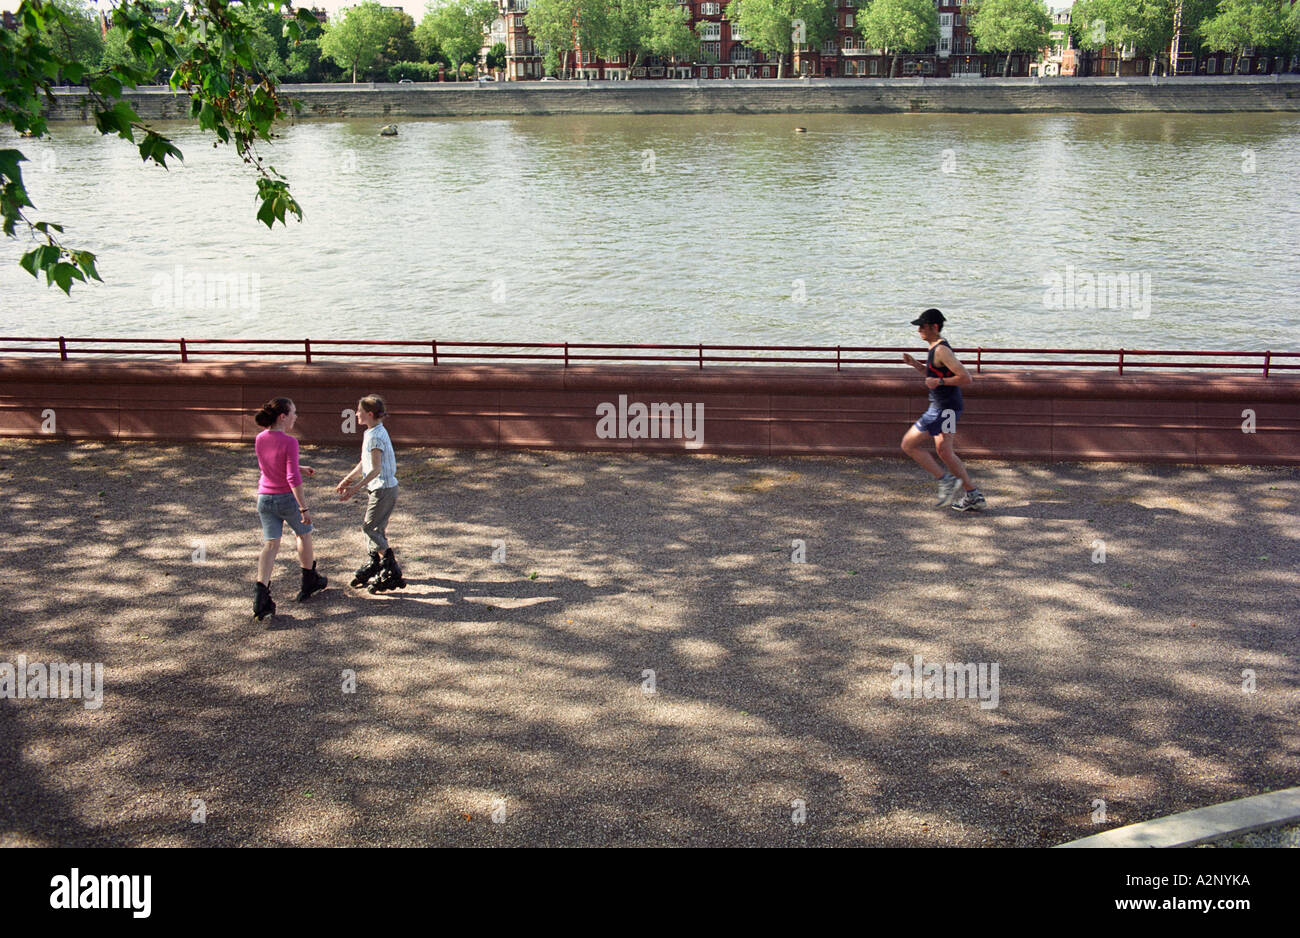 United Kingdom, England, London. Battersea Park alongside the river Thames. Young people roller skating. Man jogging Stock Photo